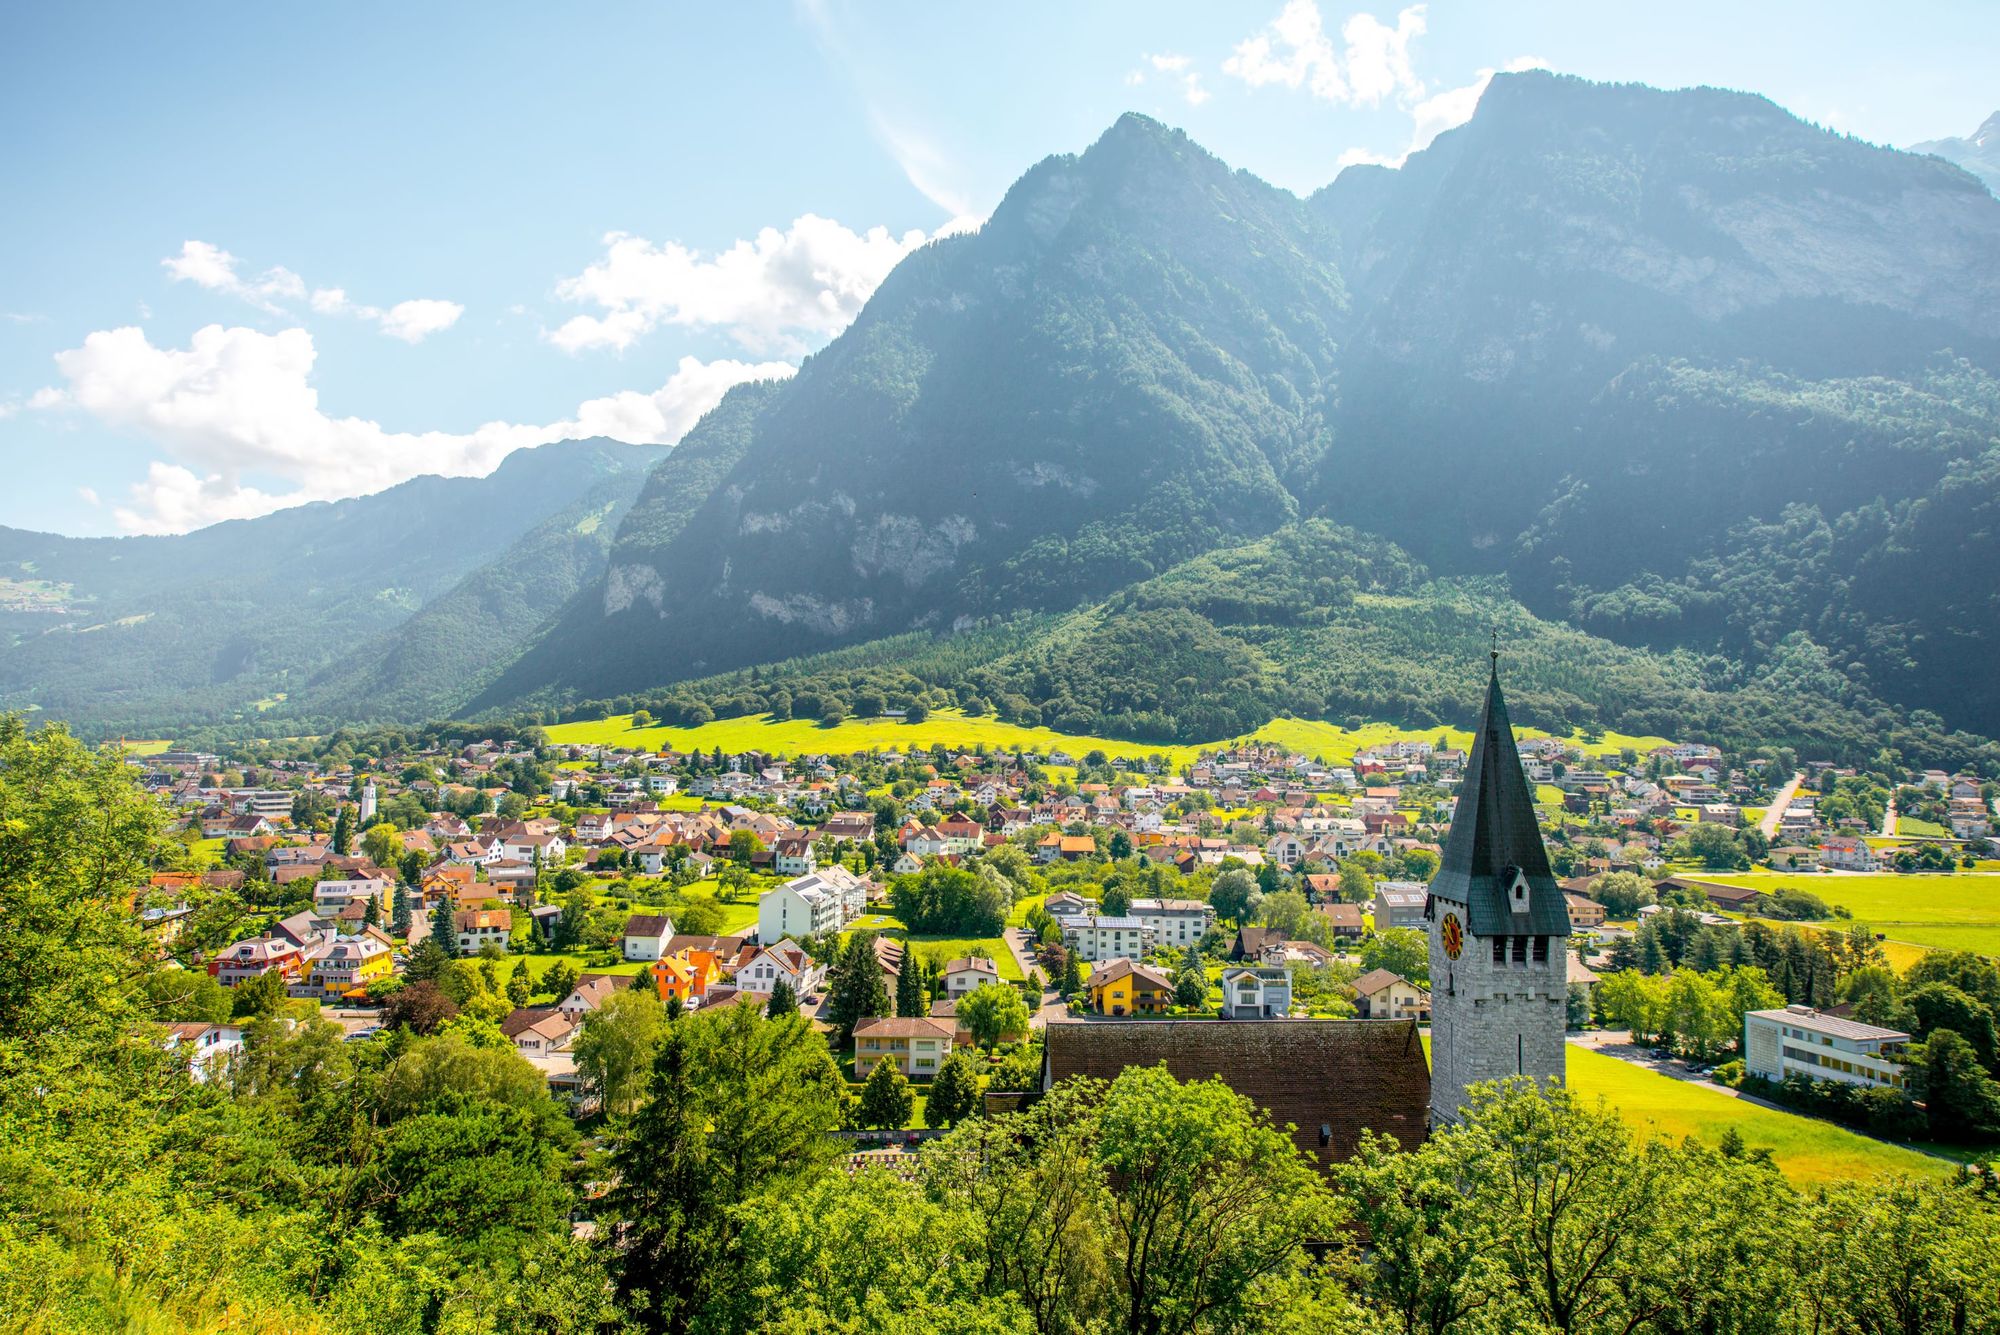 The green, vibrant view of Balzers village, with St. Nicholas church in the foreground, in Liechtenstein.